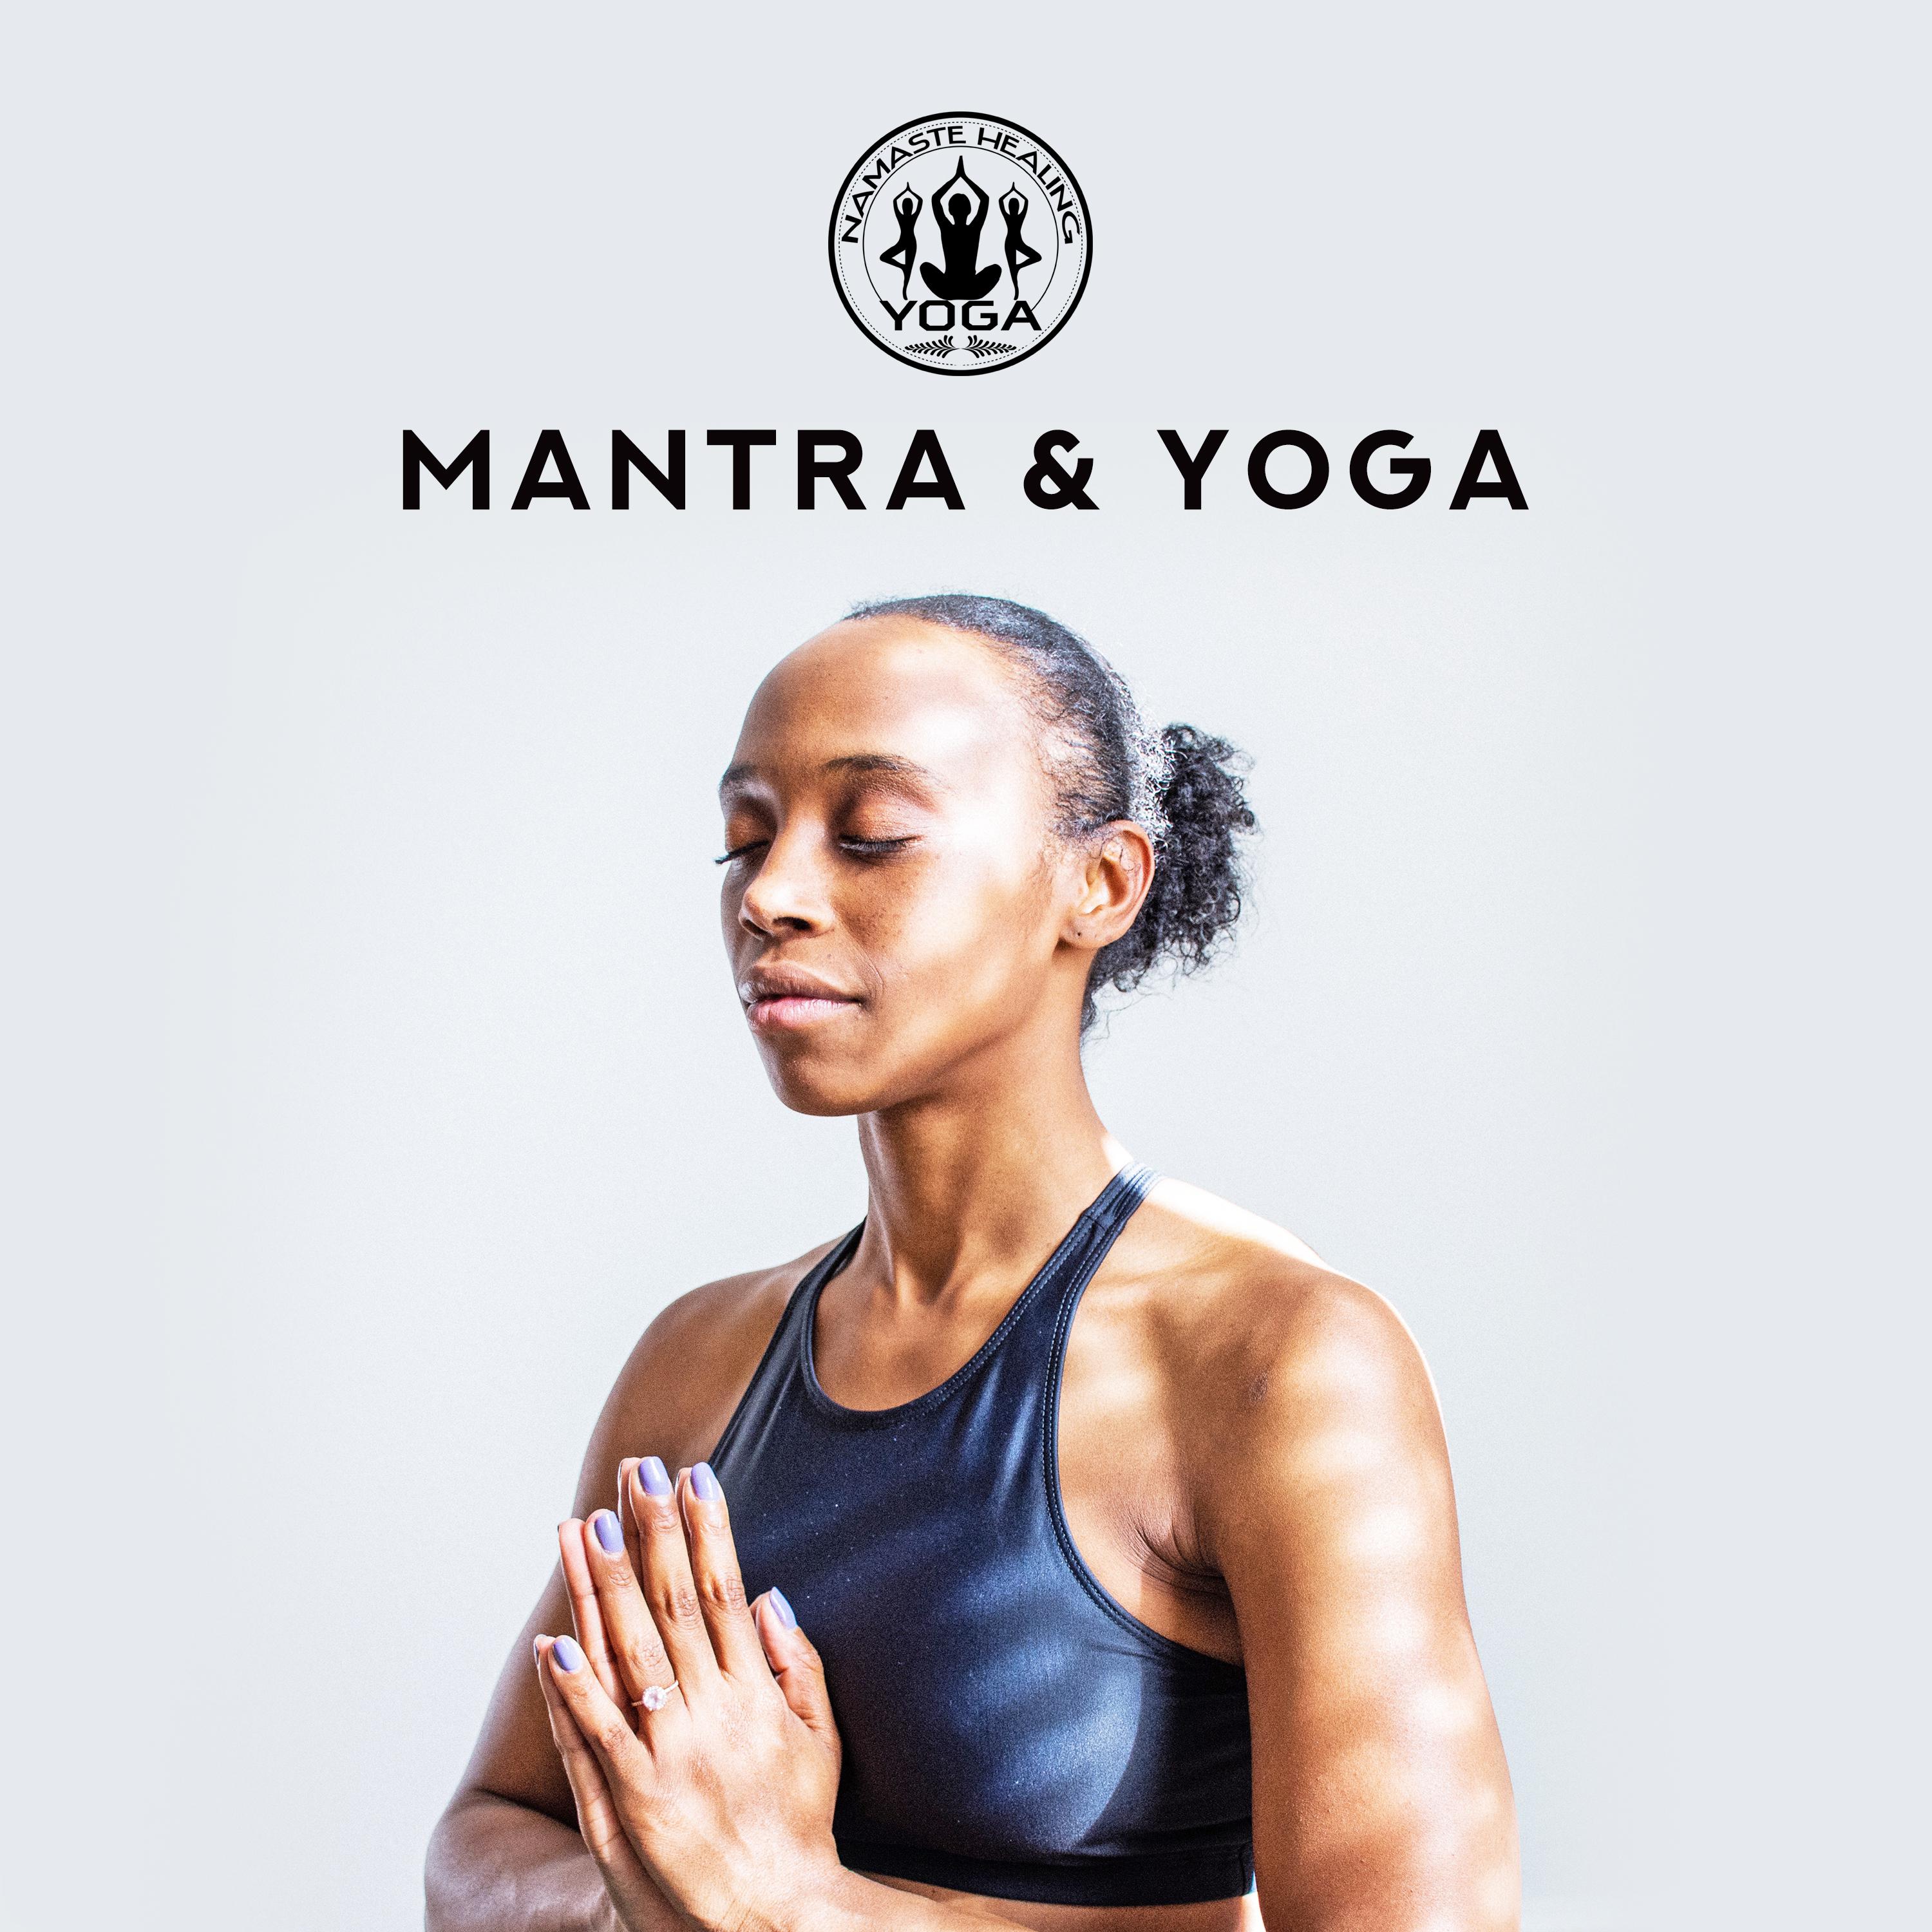 Mantra & Yoga (Breathing, Focus, Serenity)